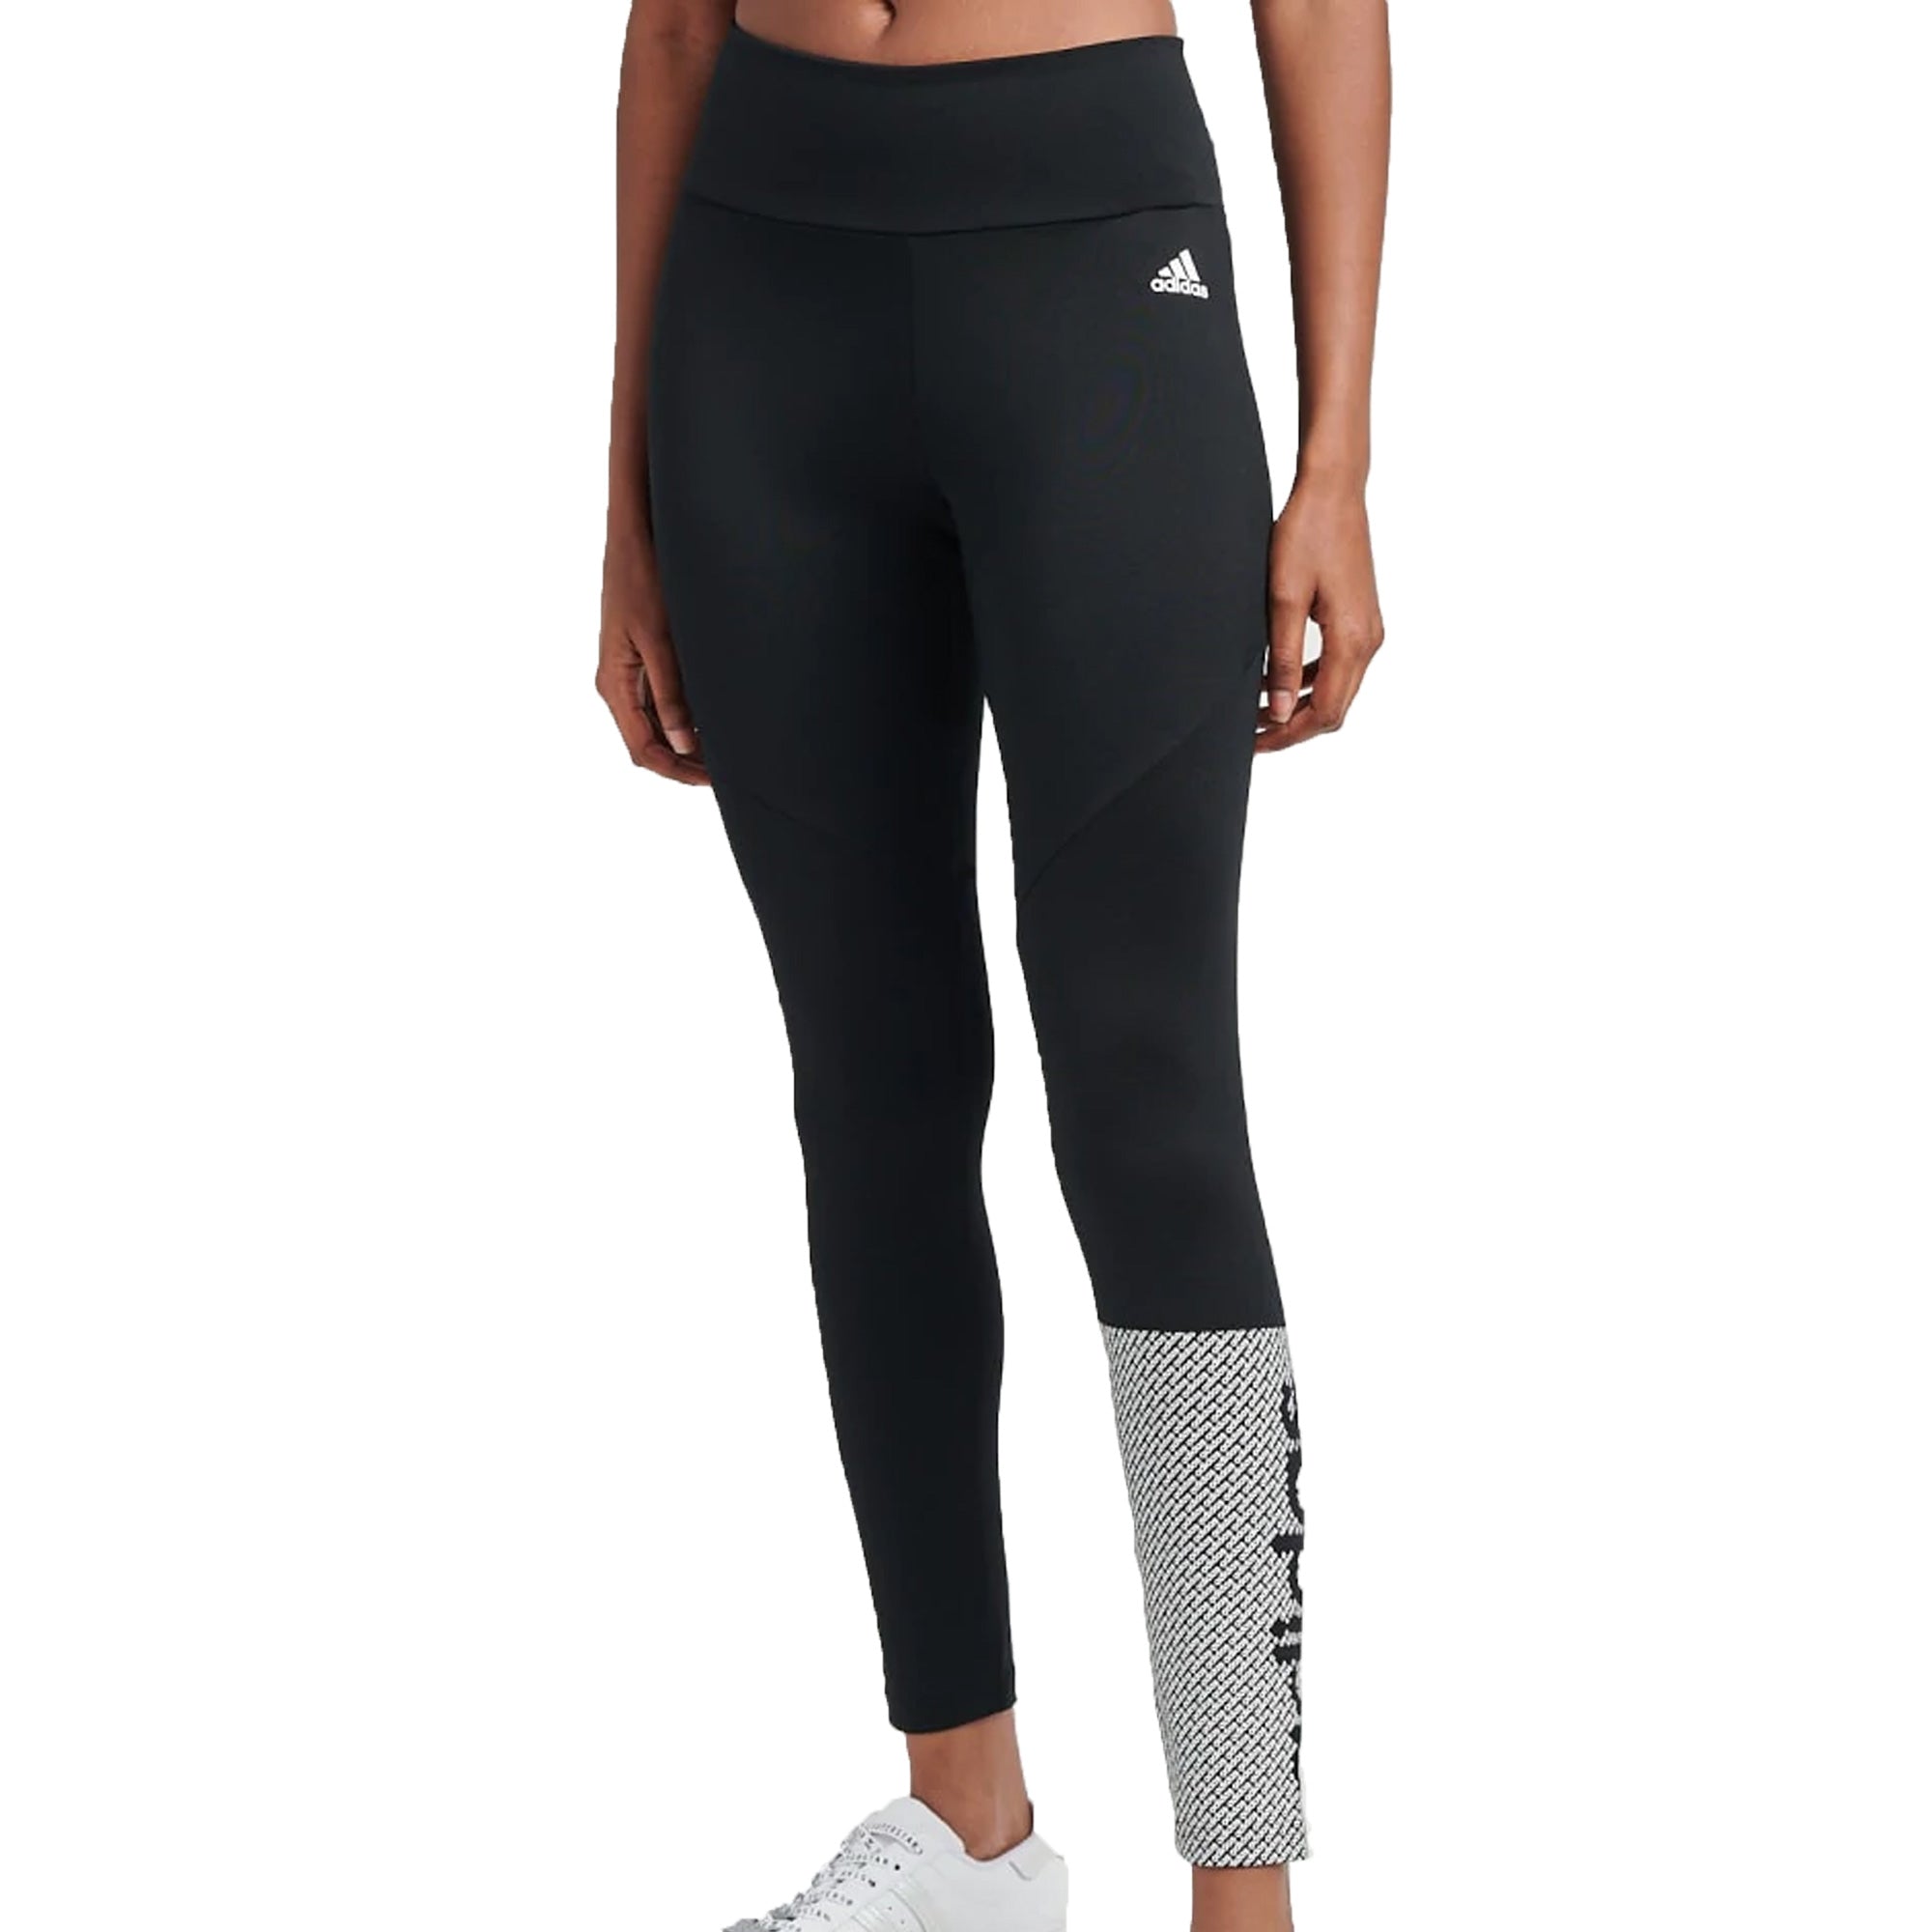 Nike Women's Dri-Fit One Mid-Rise Tights Desert Berry/Black